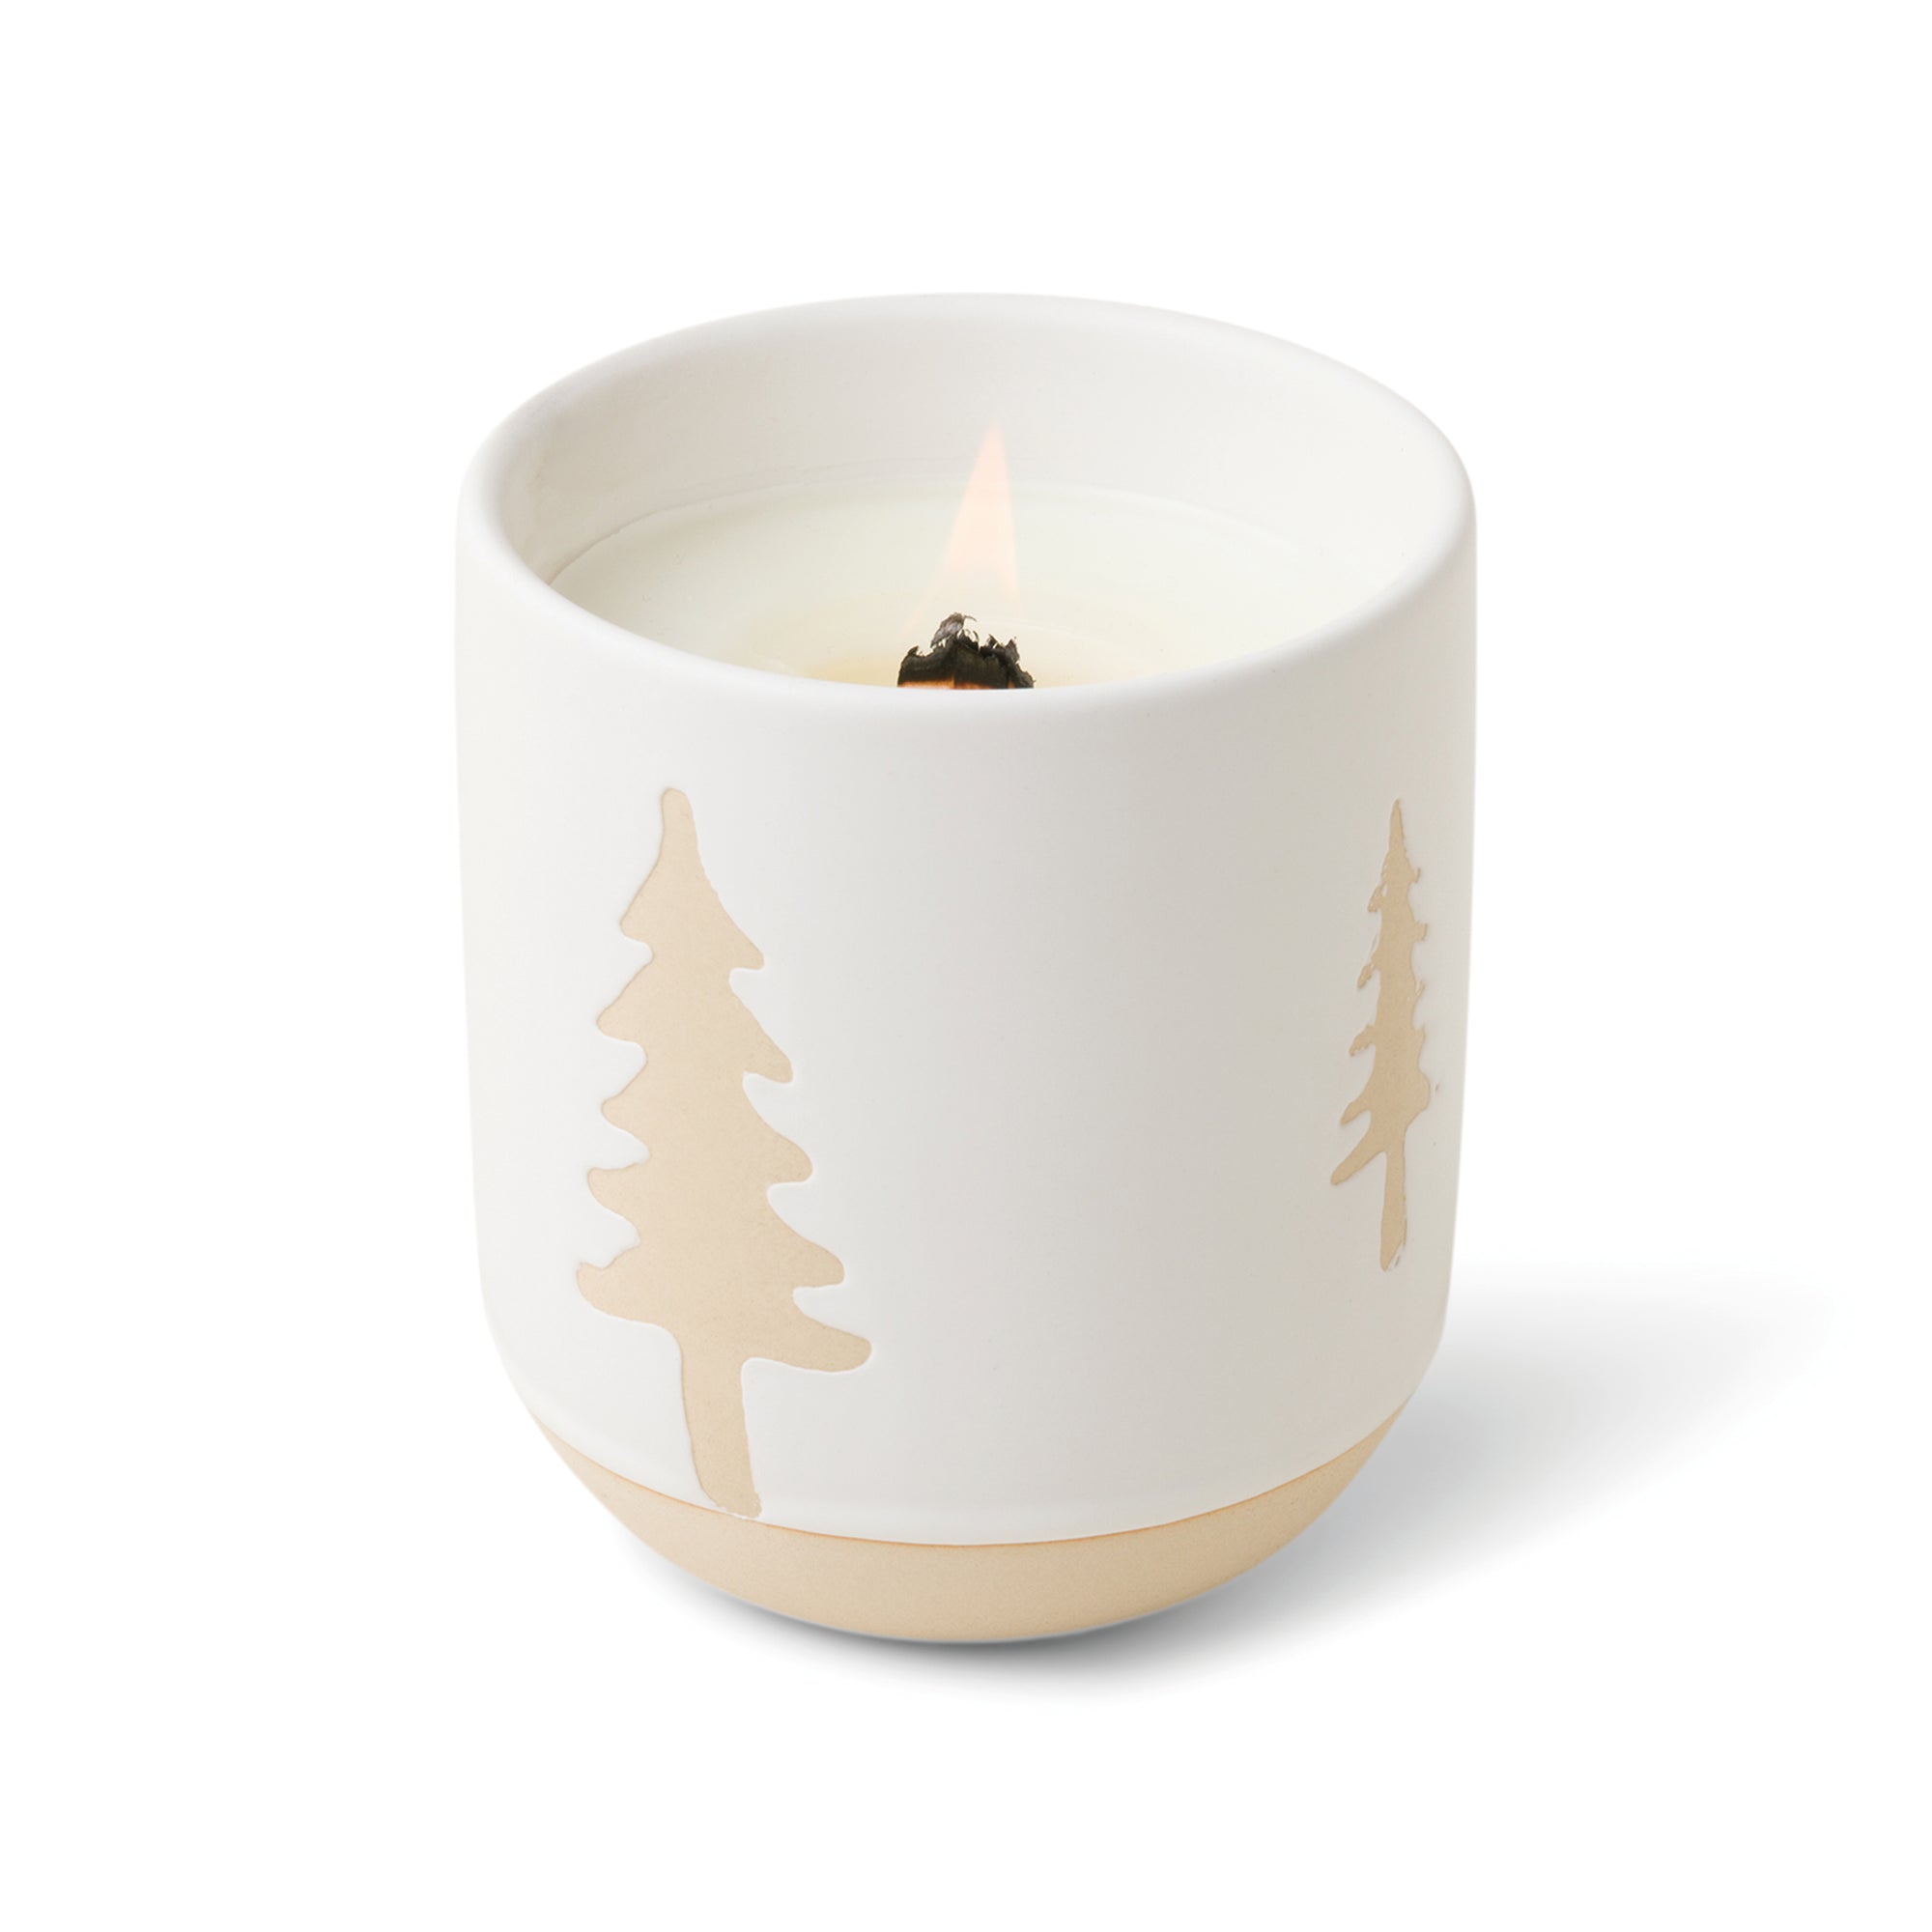 The White Glaze Ceramic Tree Candle